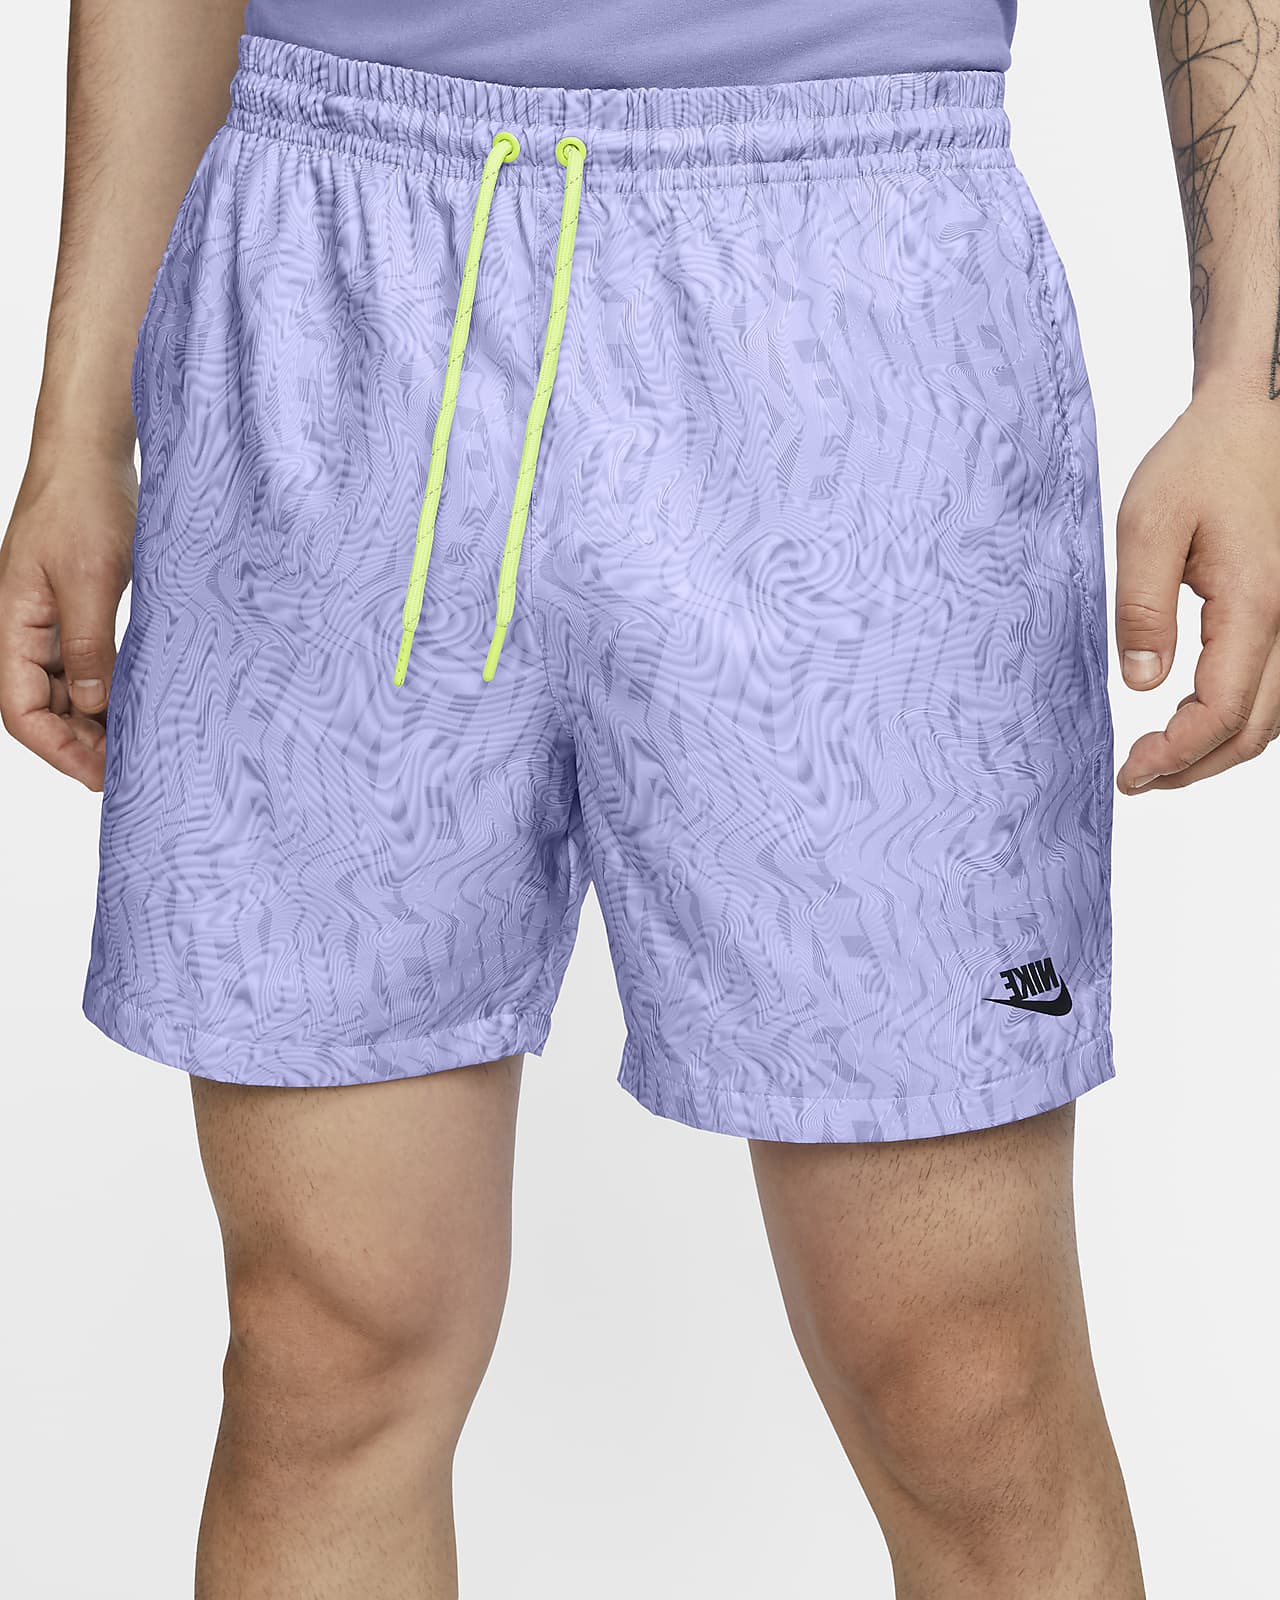 nike men's woven shorts